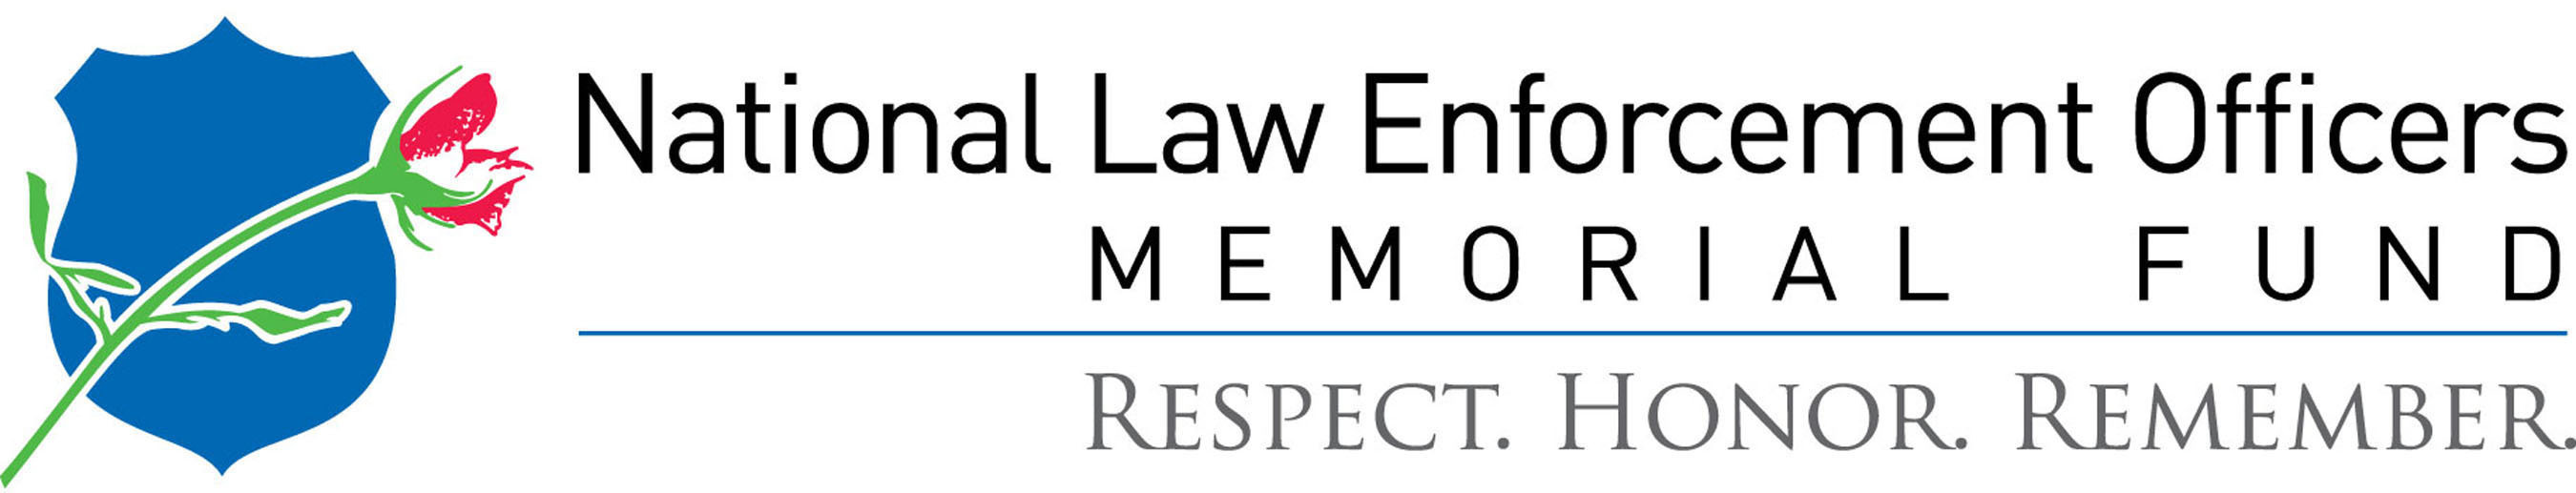 National Law Enforcement Officers Memorial Fund logo.